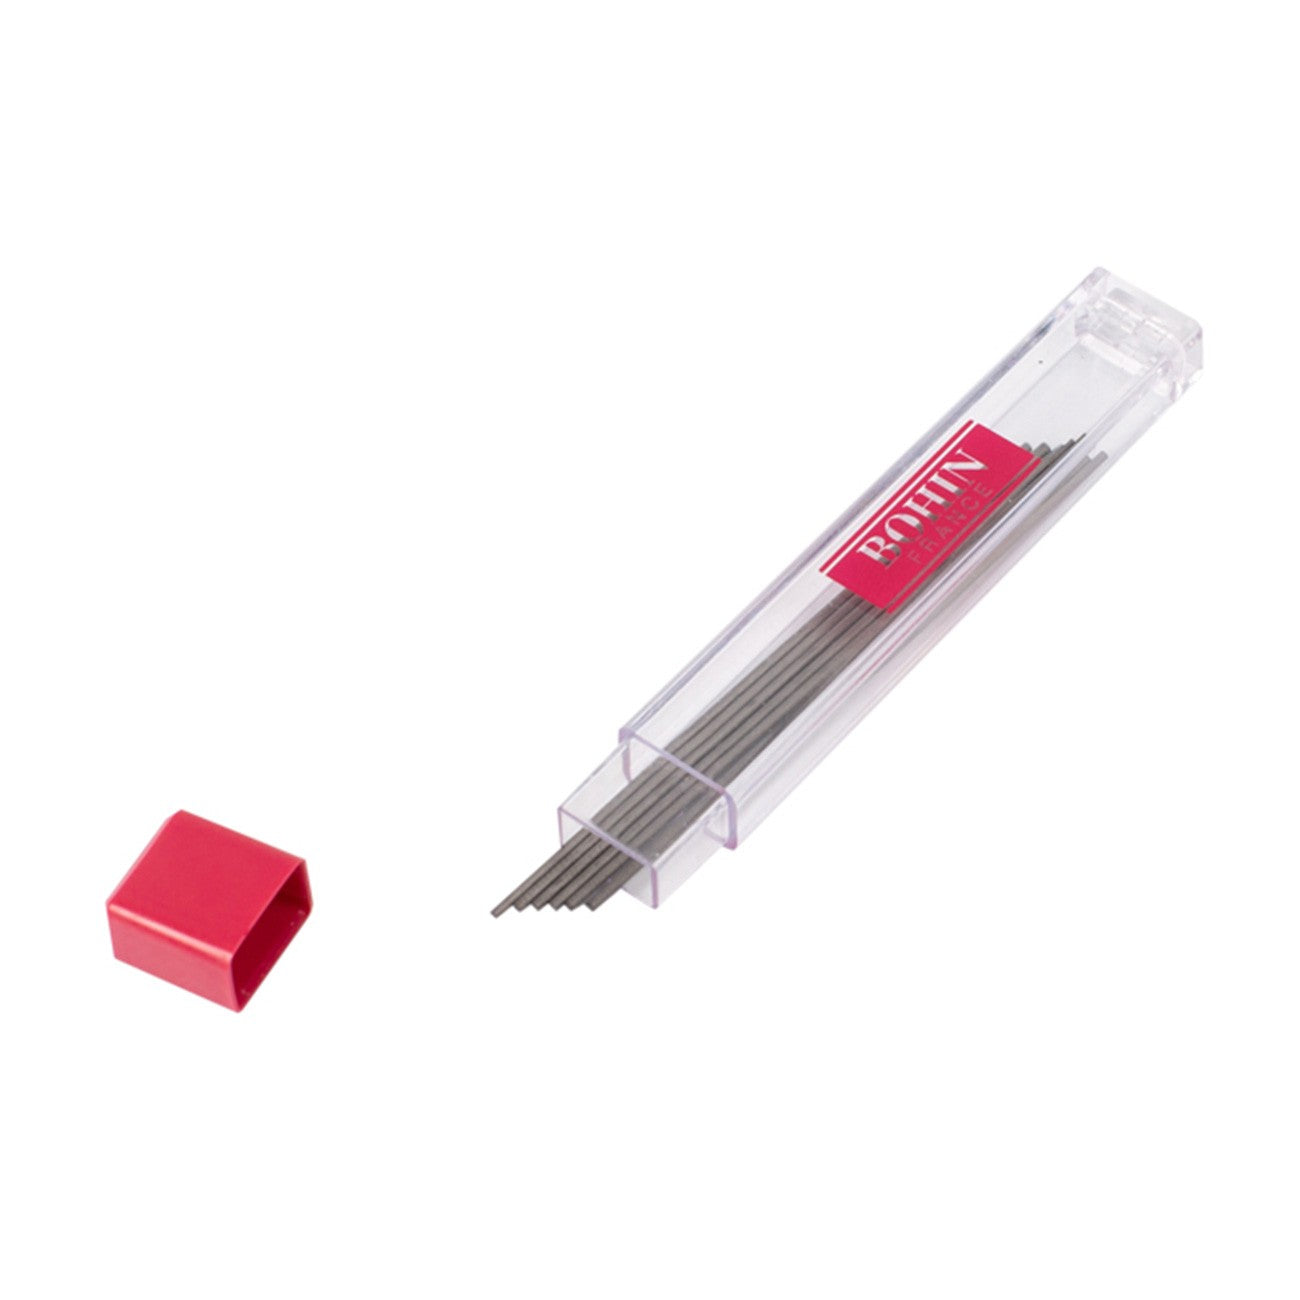 Bohin 0.9mm Mechanical Fabric Marking Pencil Refill, Gray Ceramic Lead (Non-Absorbing)